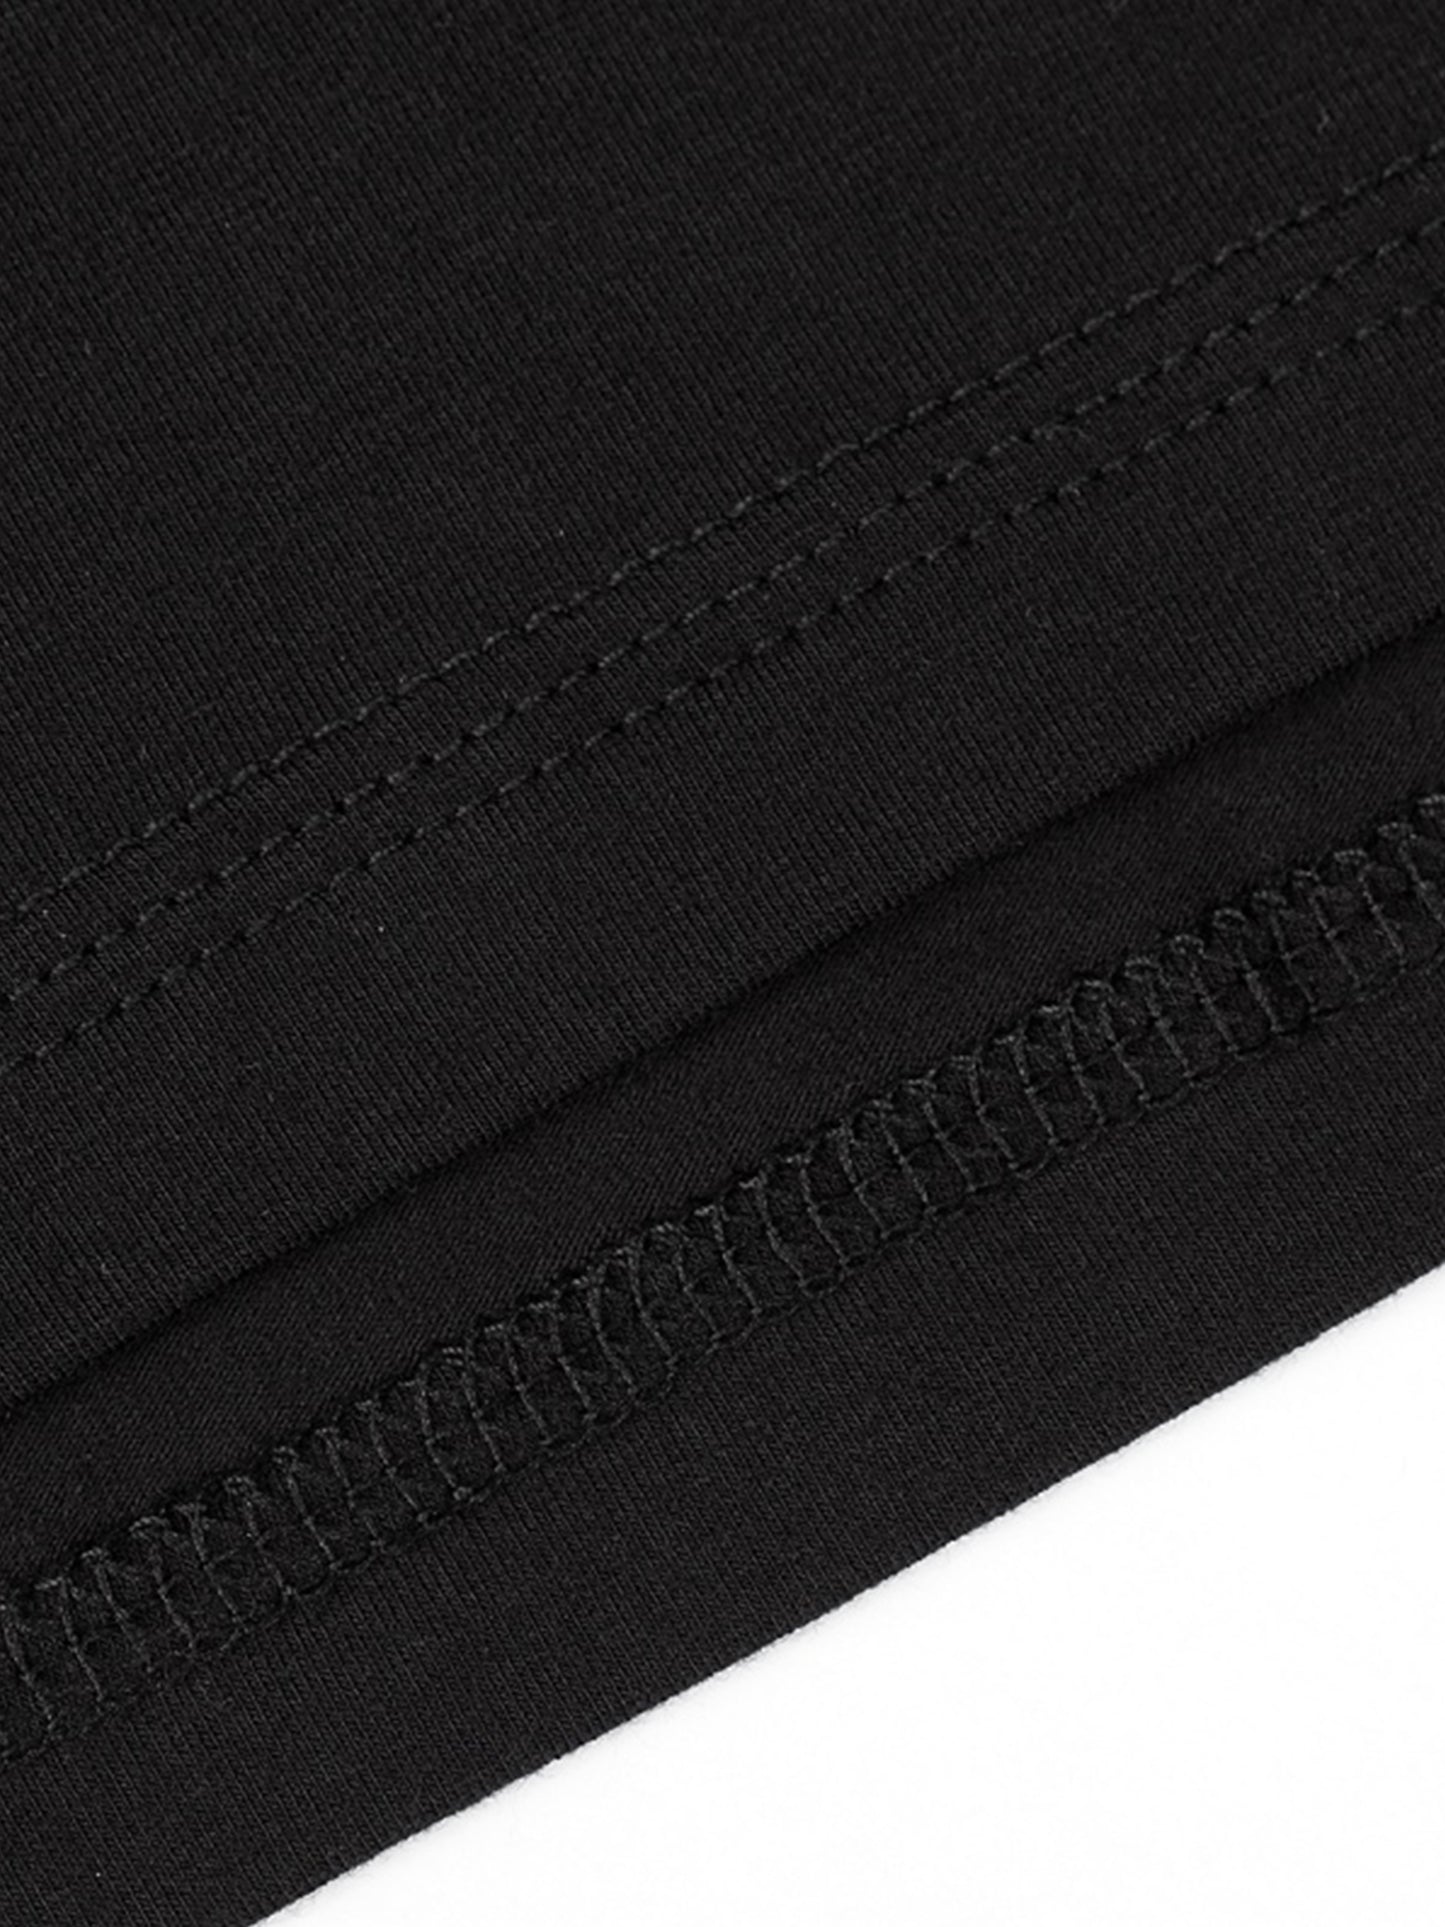 Long sleeve functional bamboo T-shirt black - Flamed Wheel